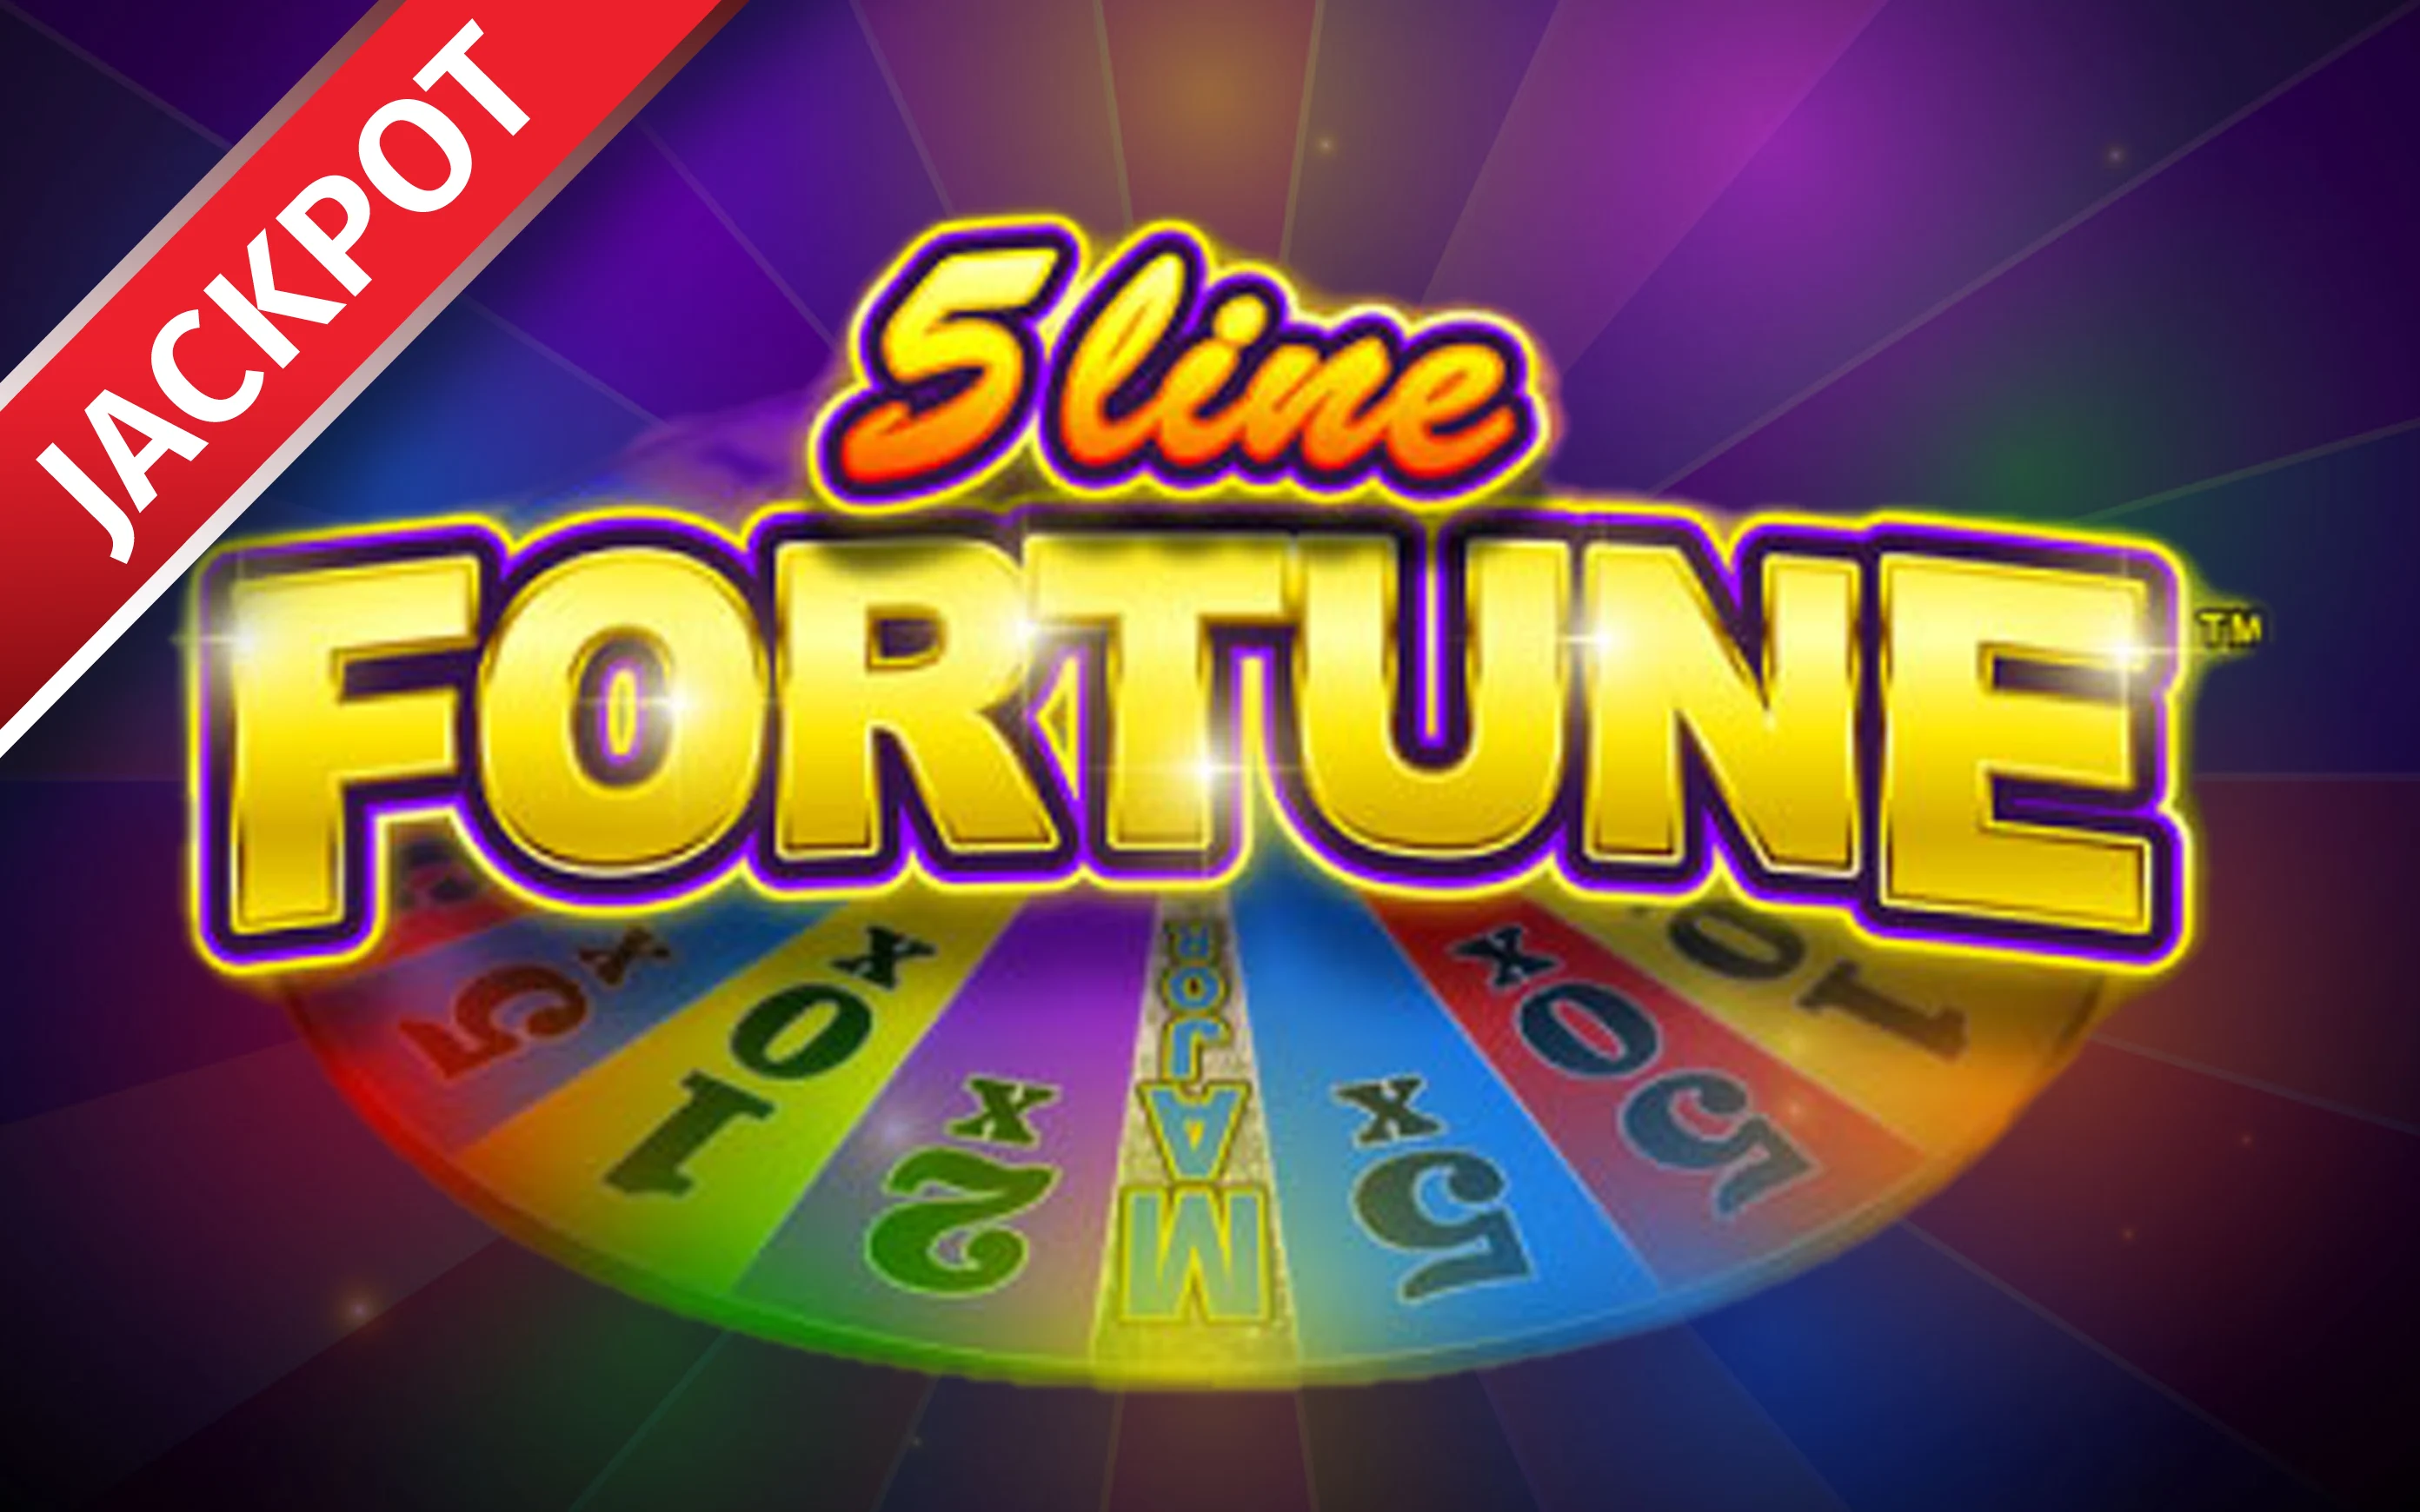 Play 5-Line Fortune™ on Starcasino.be online casino